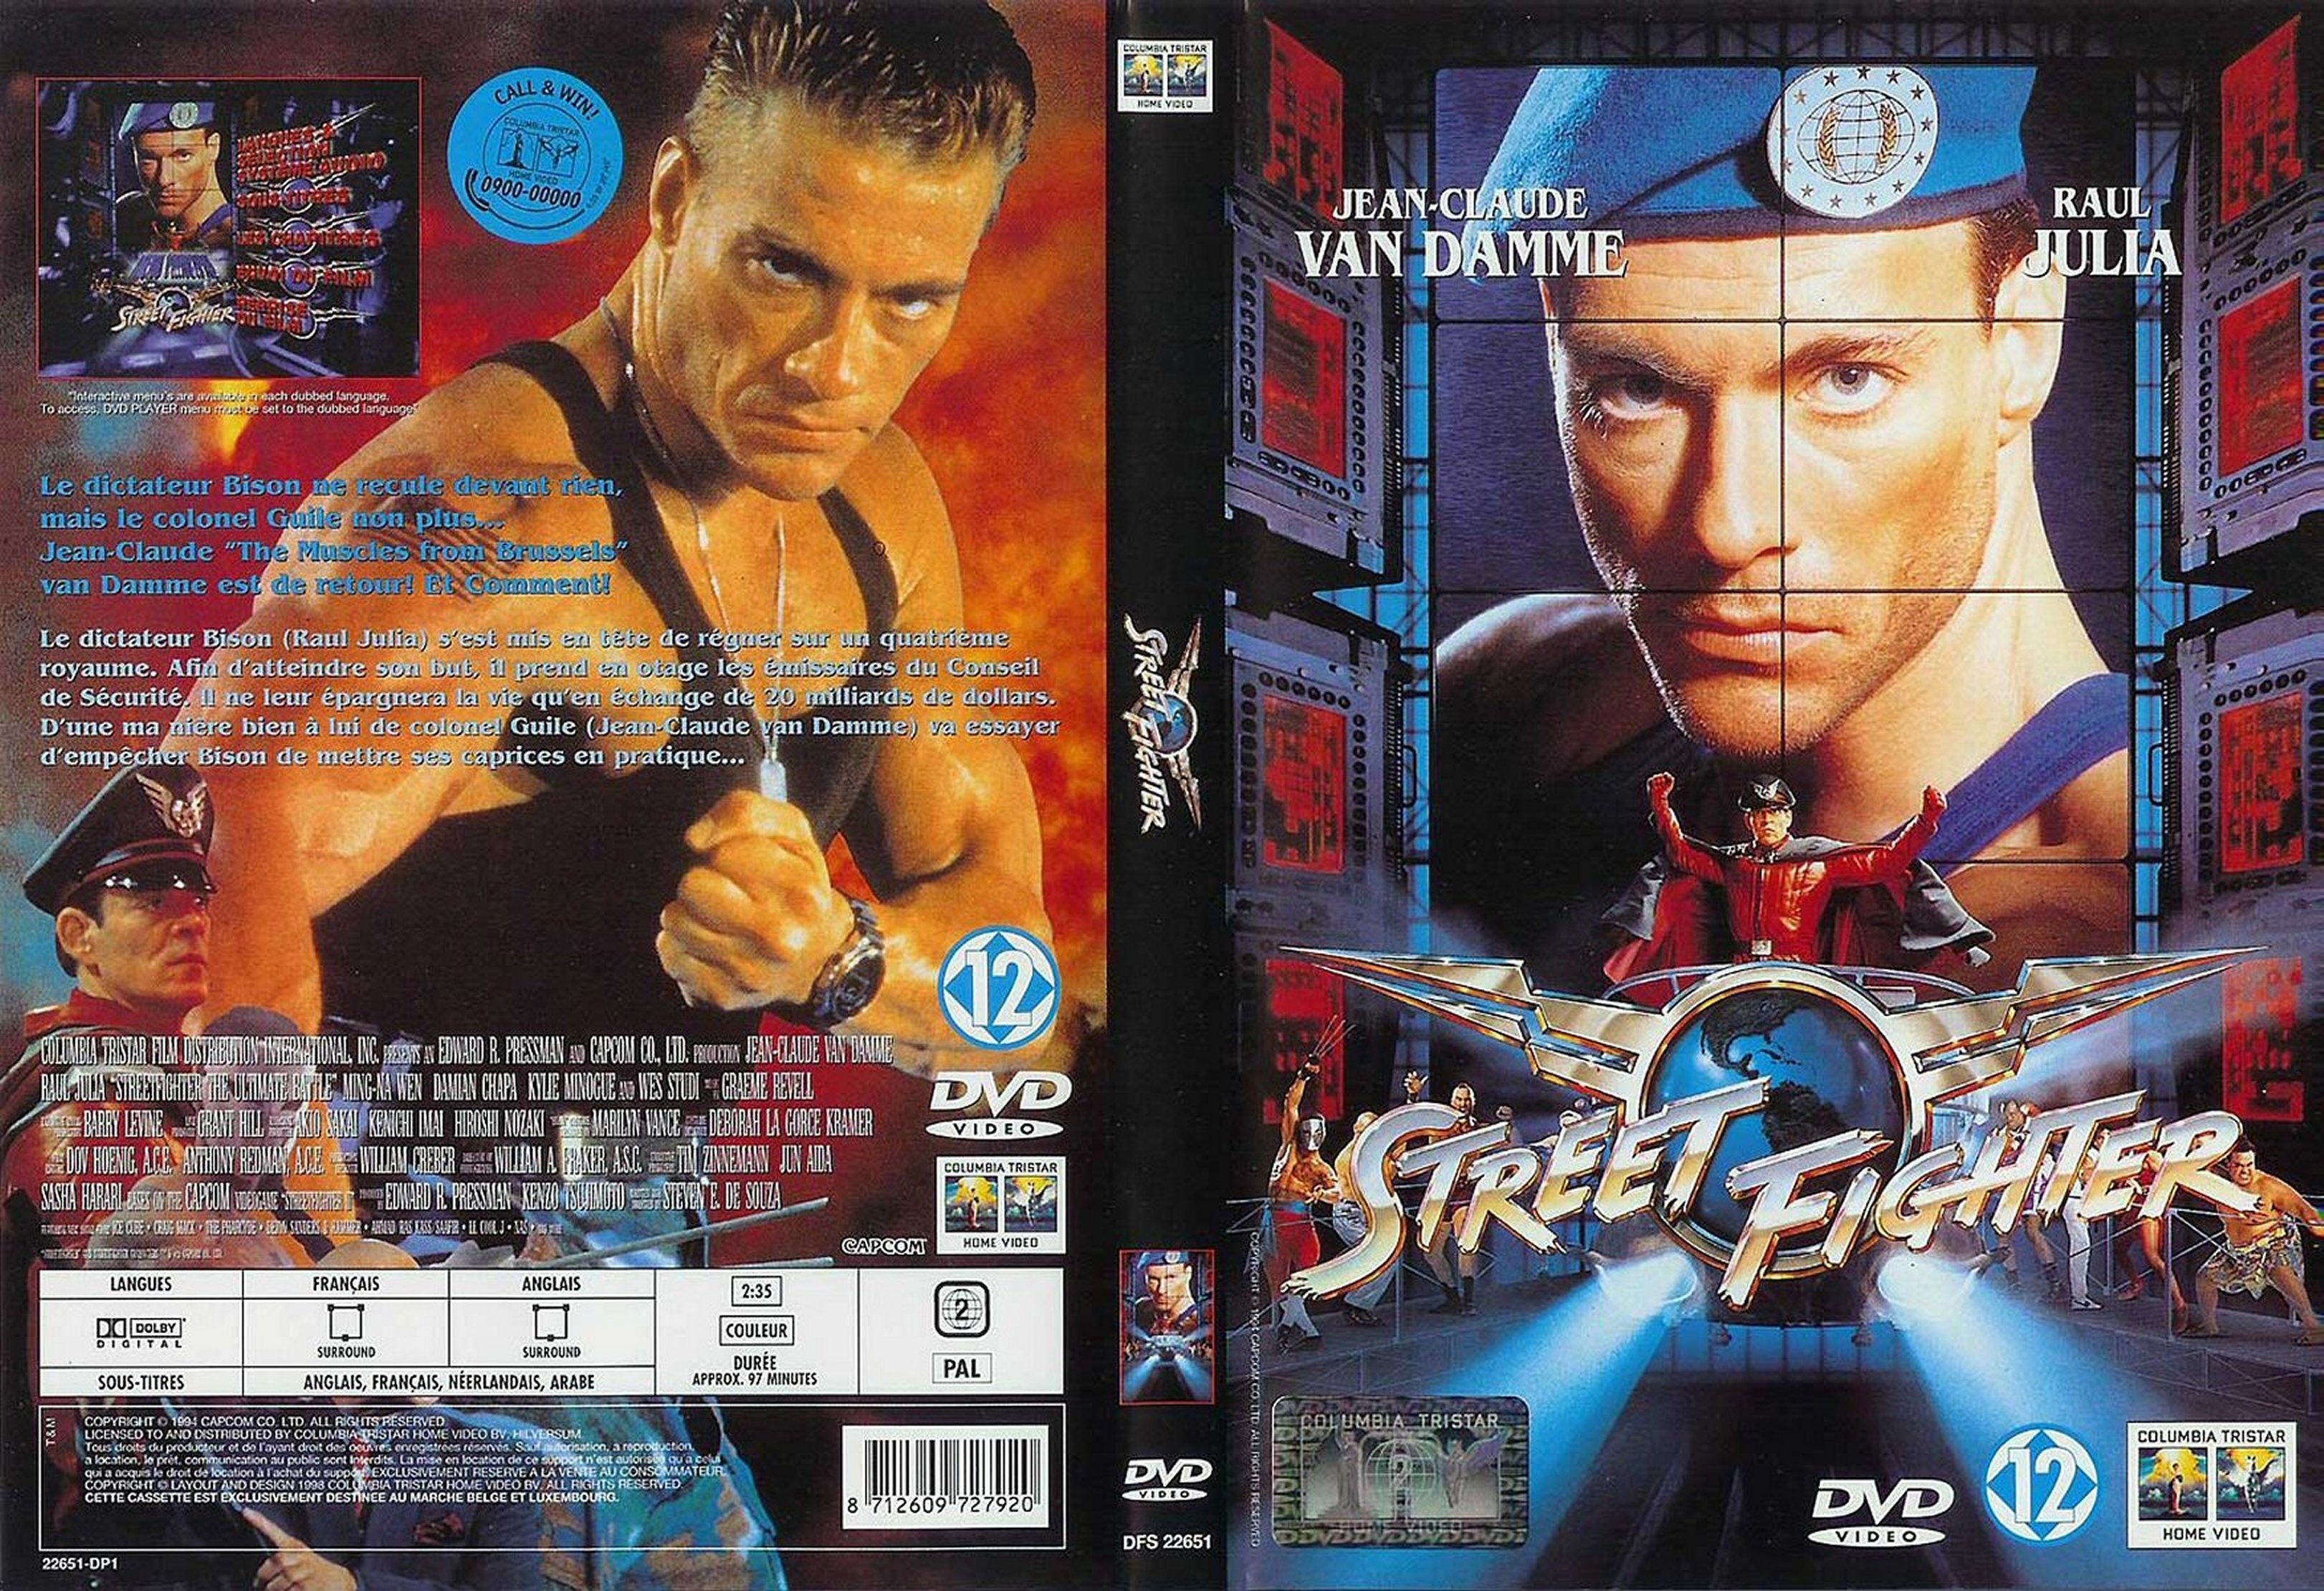 Jaquette DVD Street fighter